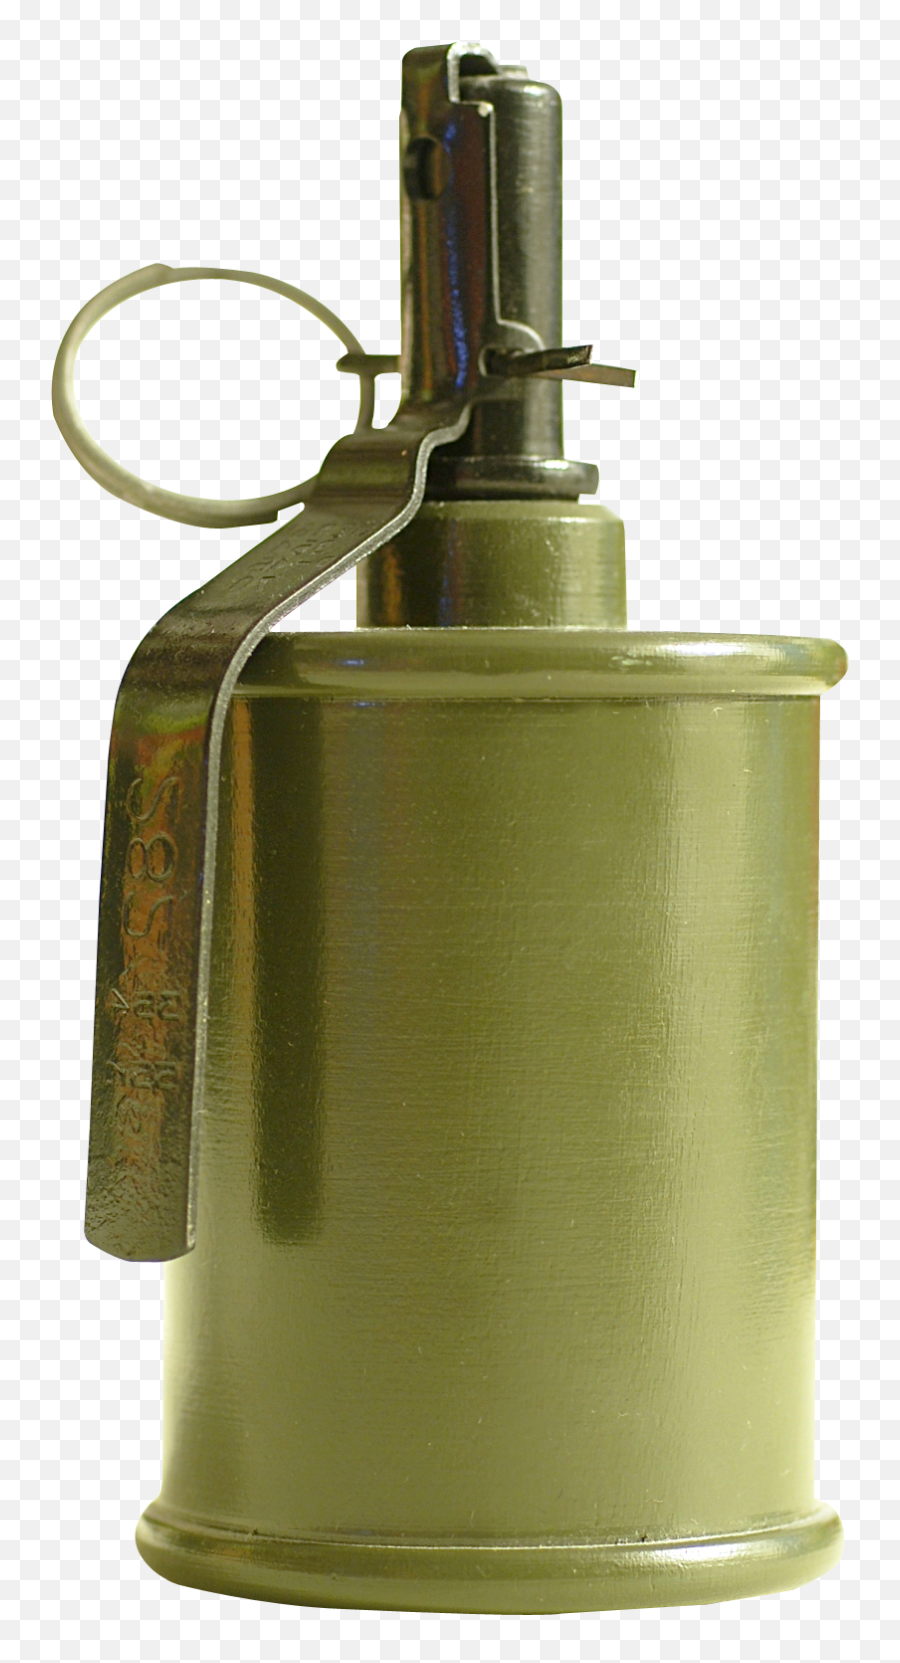 Transparent Images Snipstockcom - Handgrenadepng Grenade Cylinder Emoji,Grenade Transparent